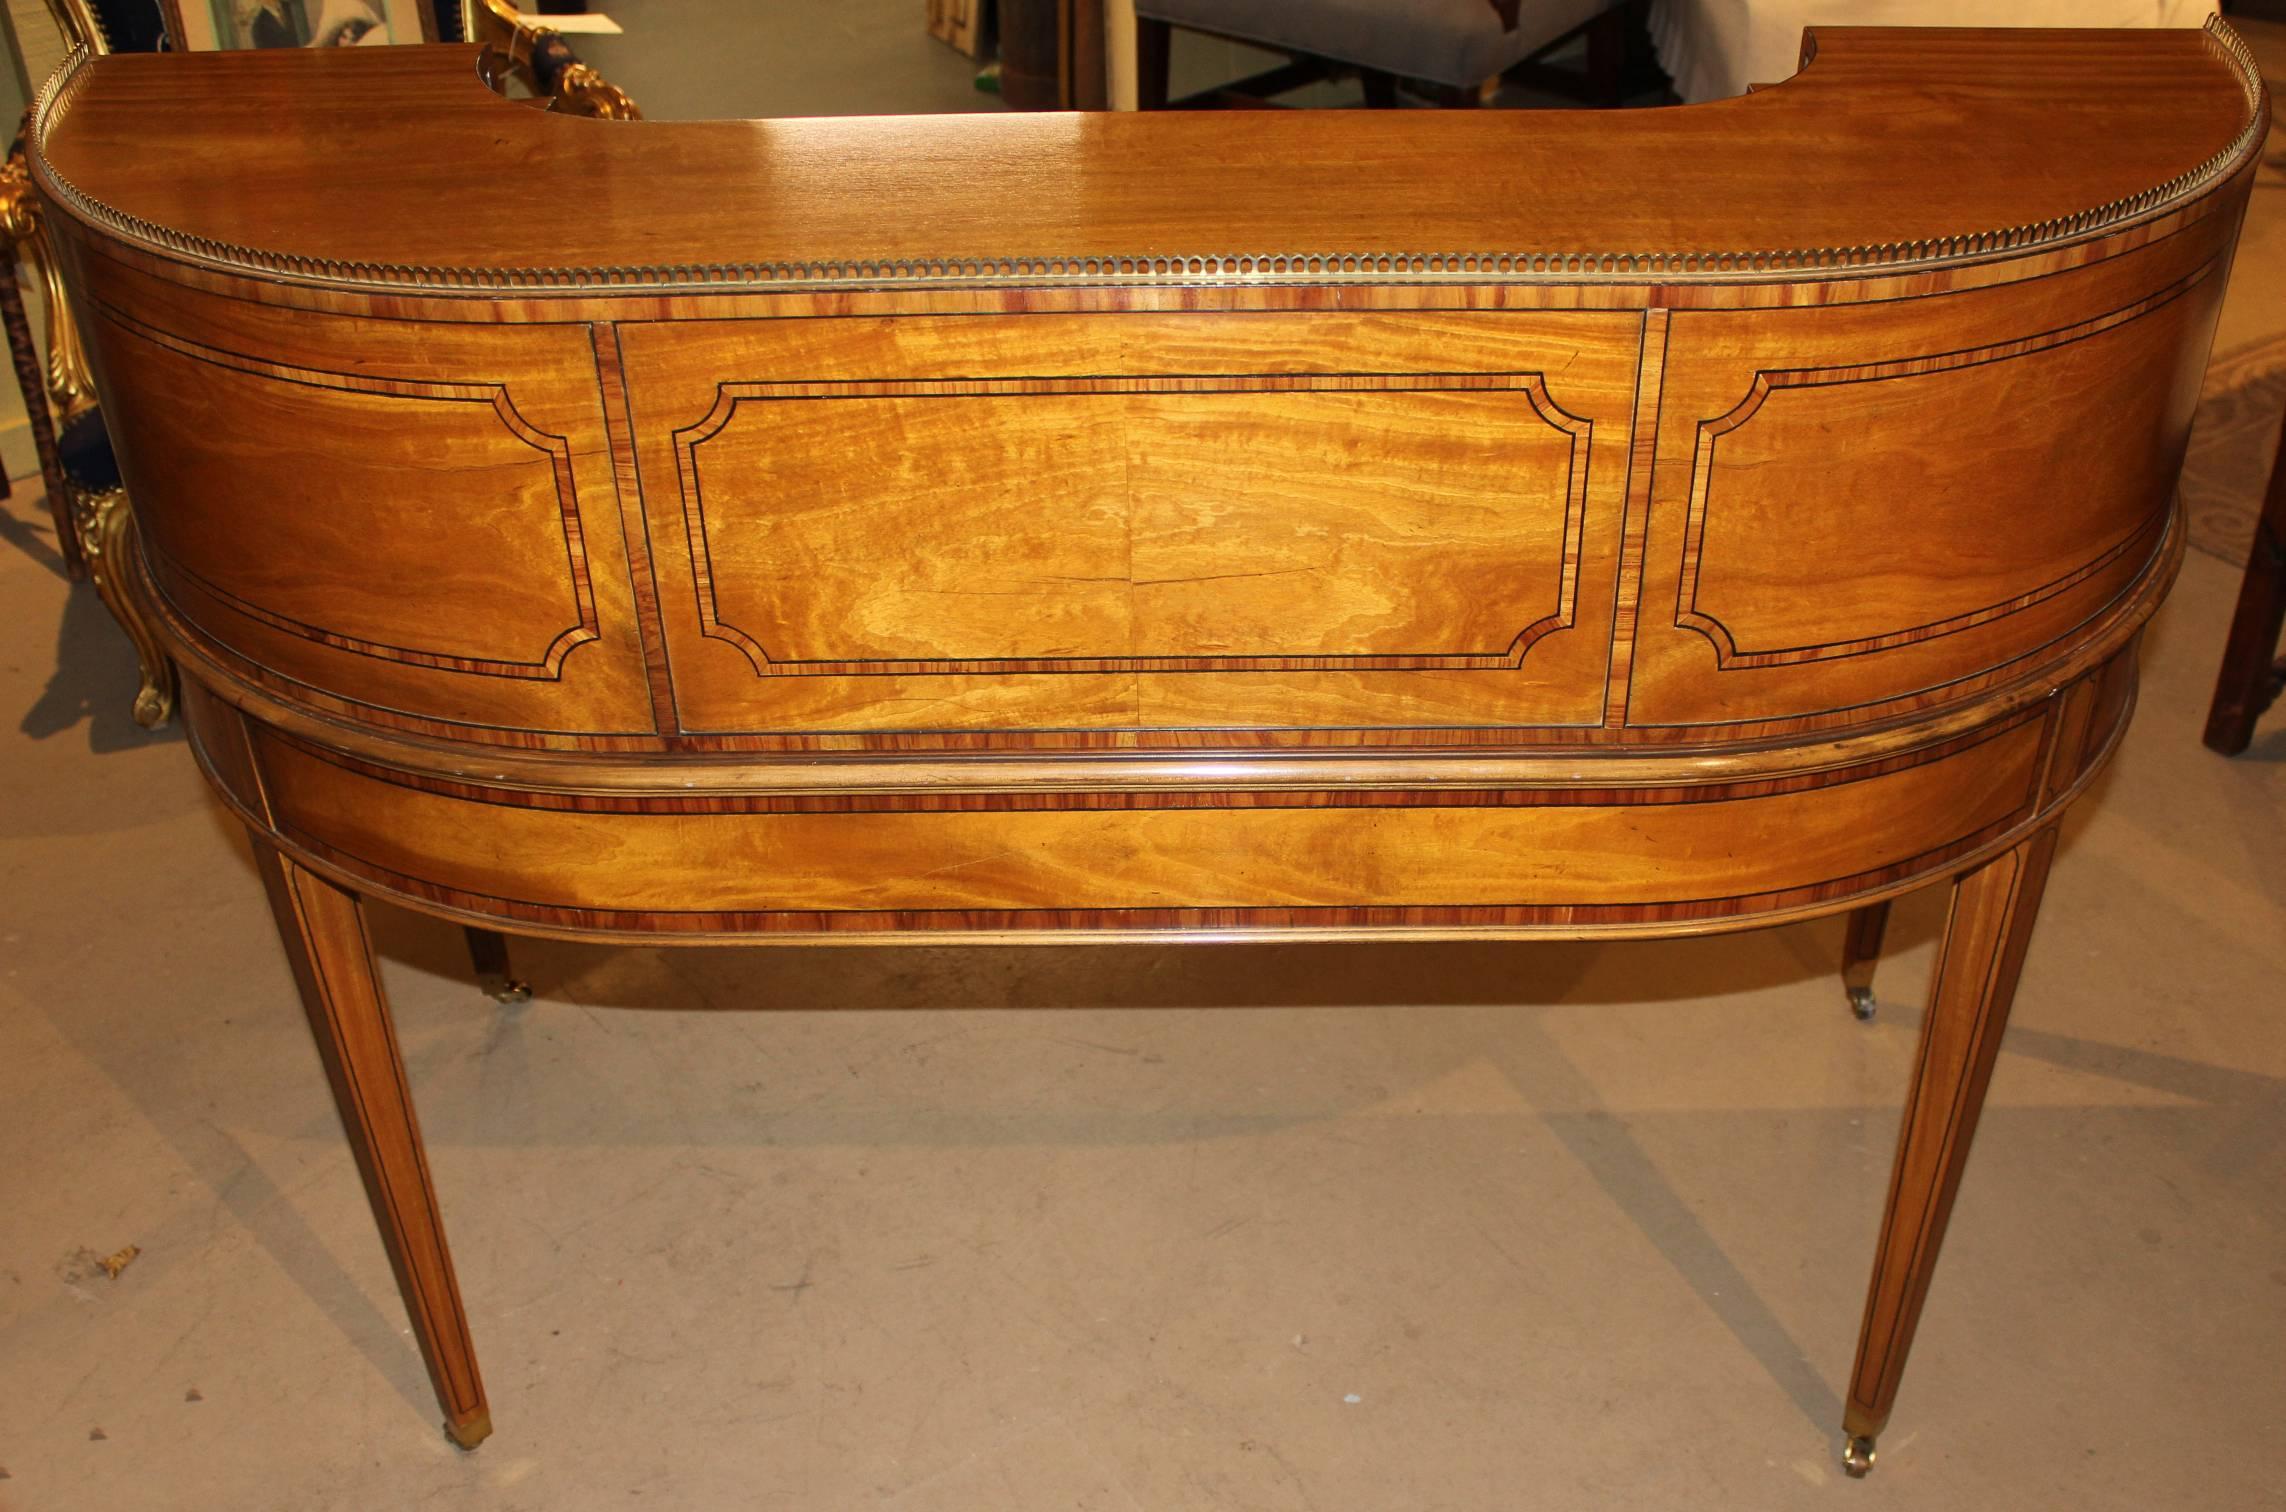 Carved Baker Furniture 1765 Carlton Collector’s Edition Satinwood Writing Desk